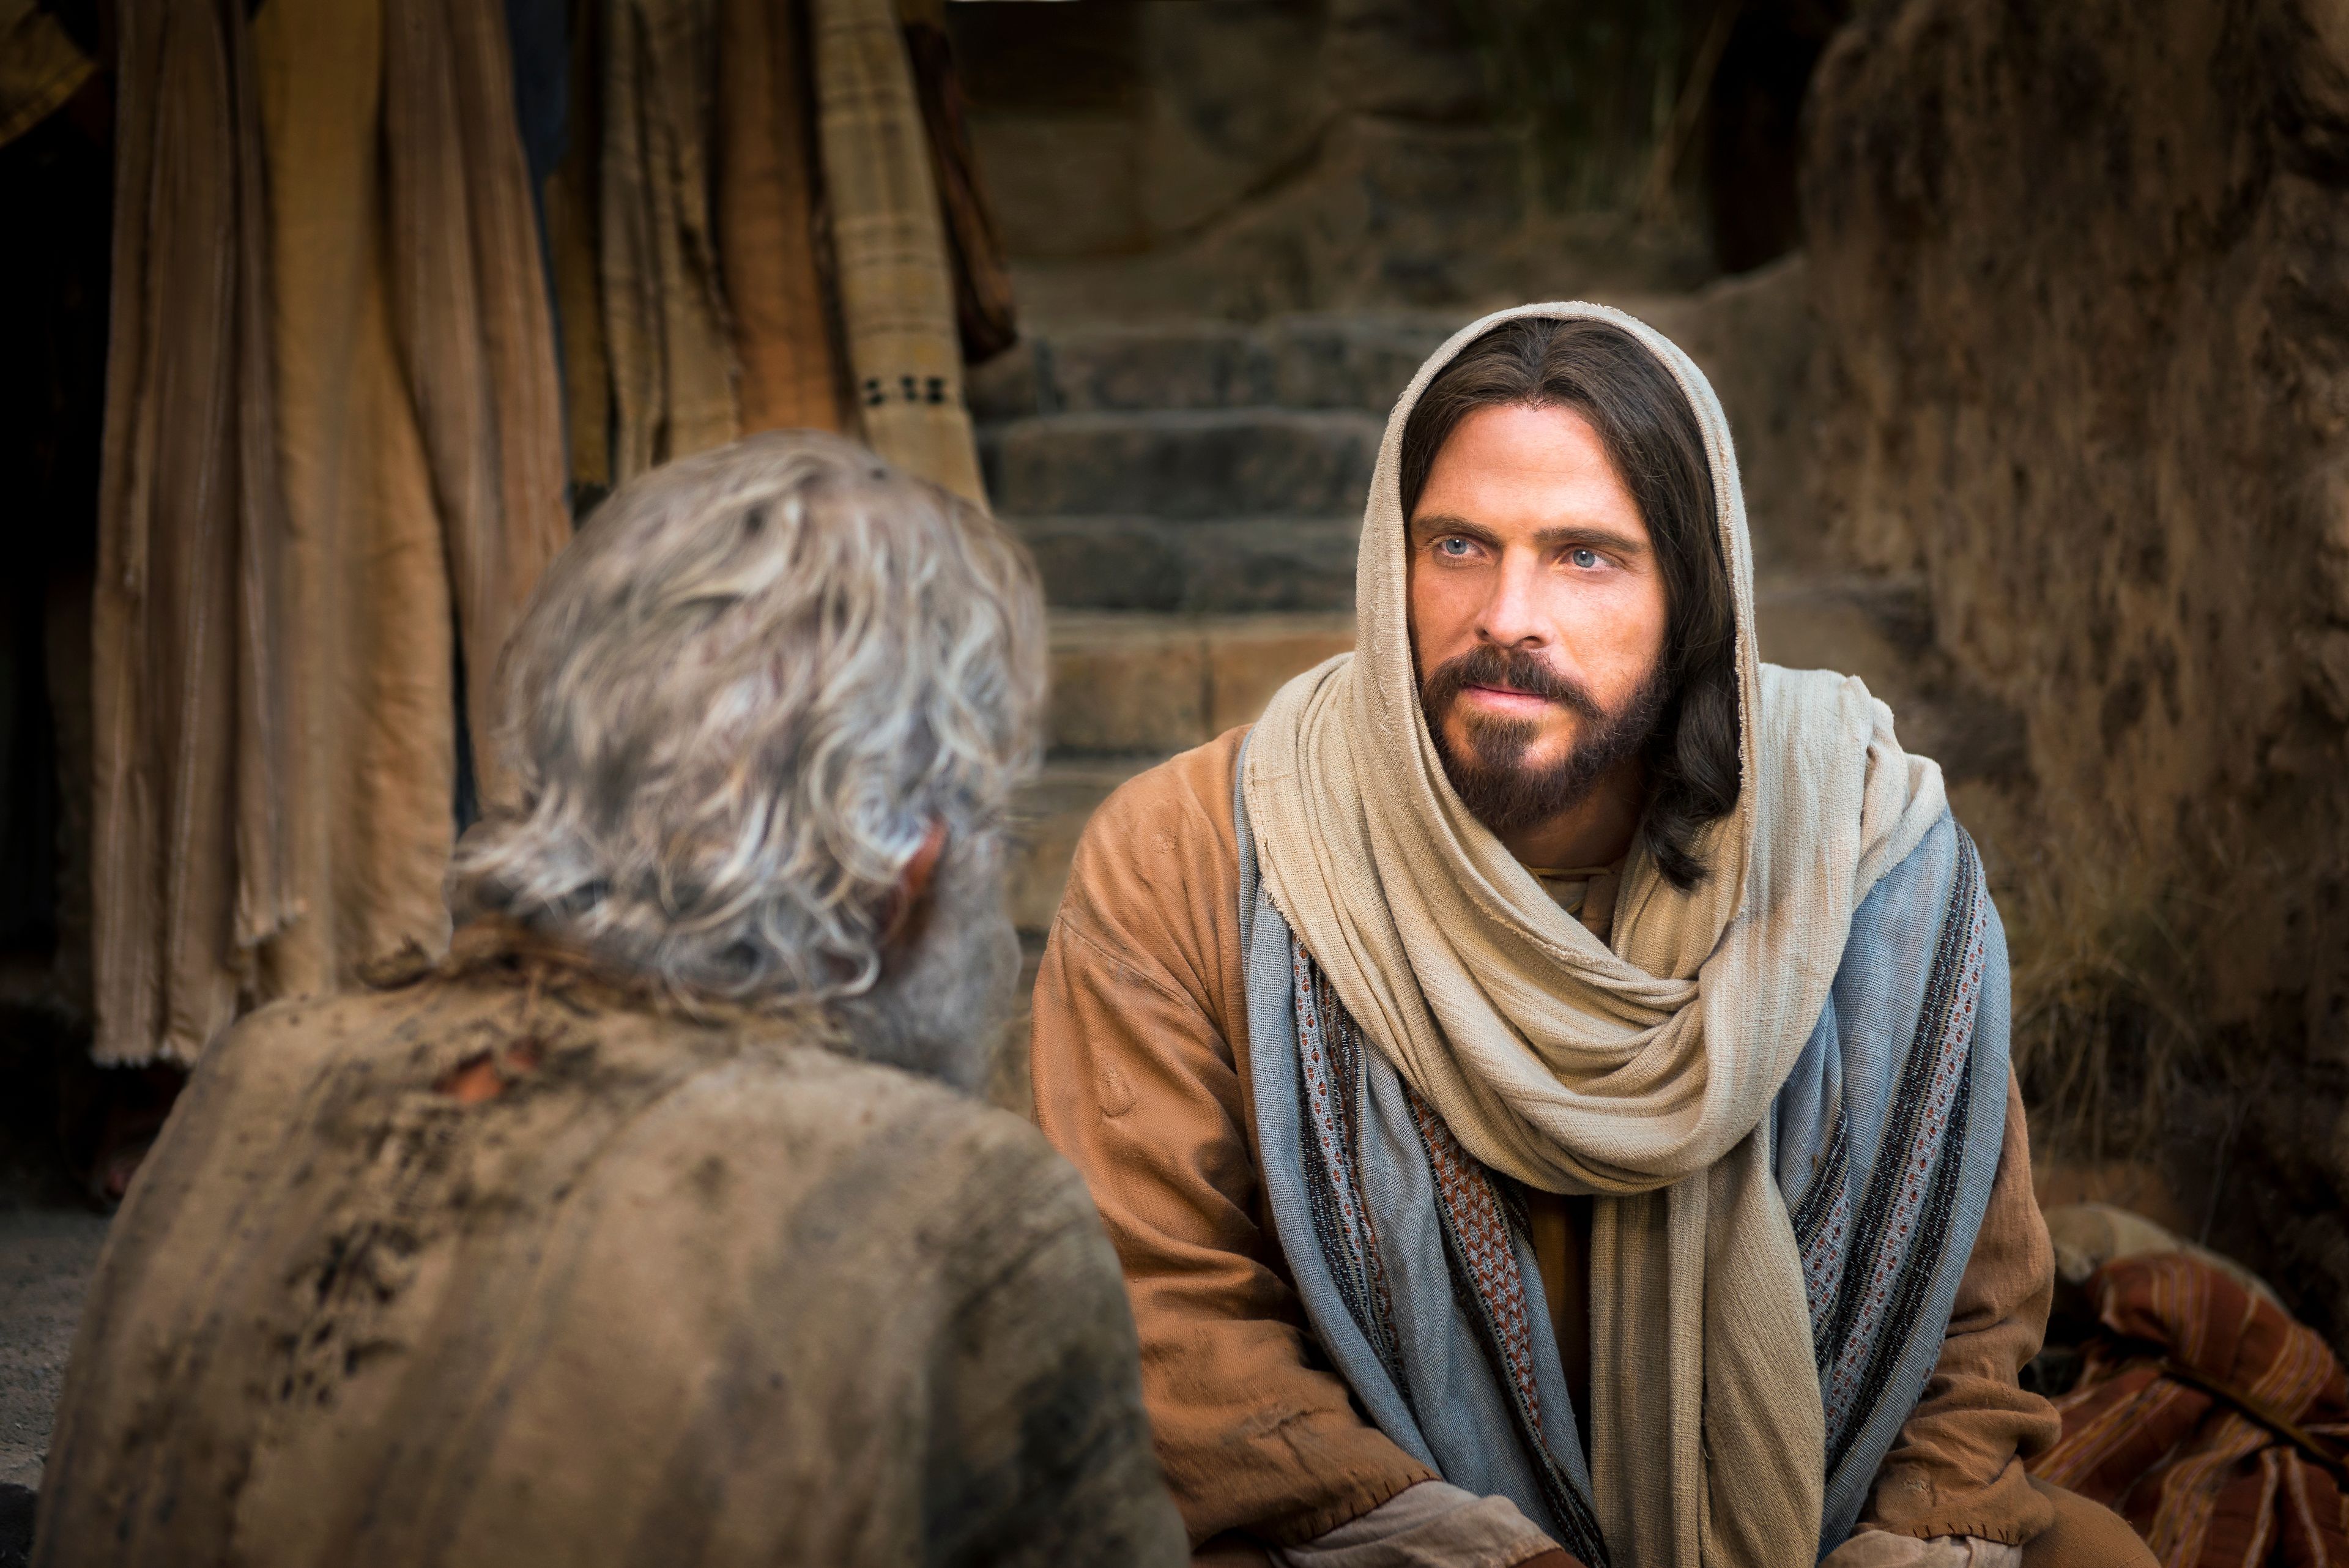 Christ sitting beside a man and healing him.